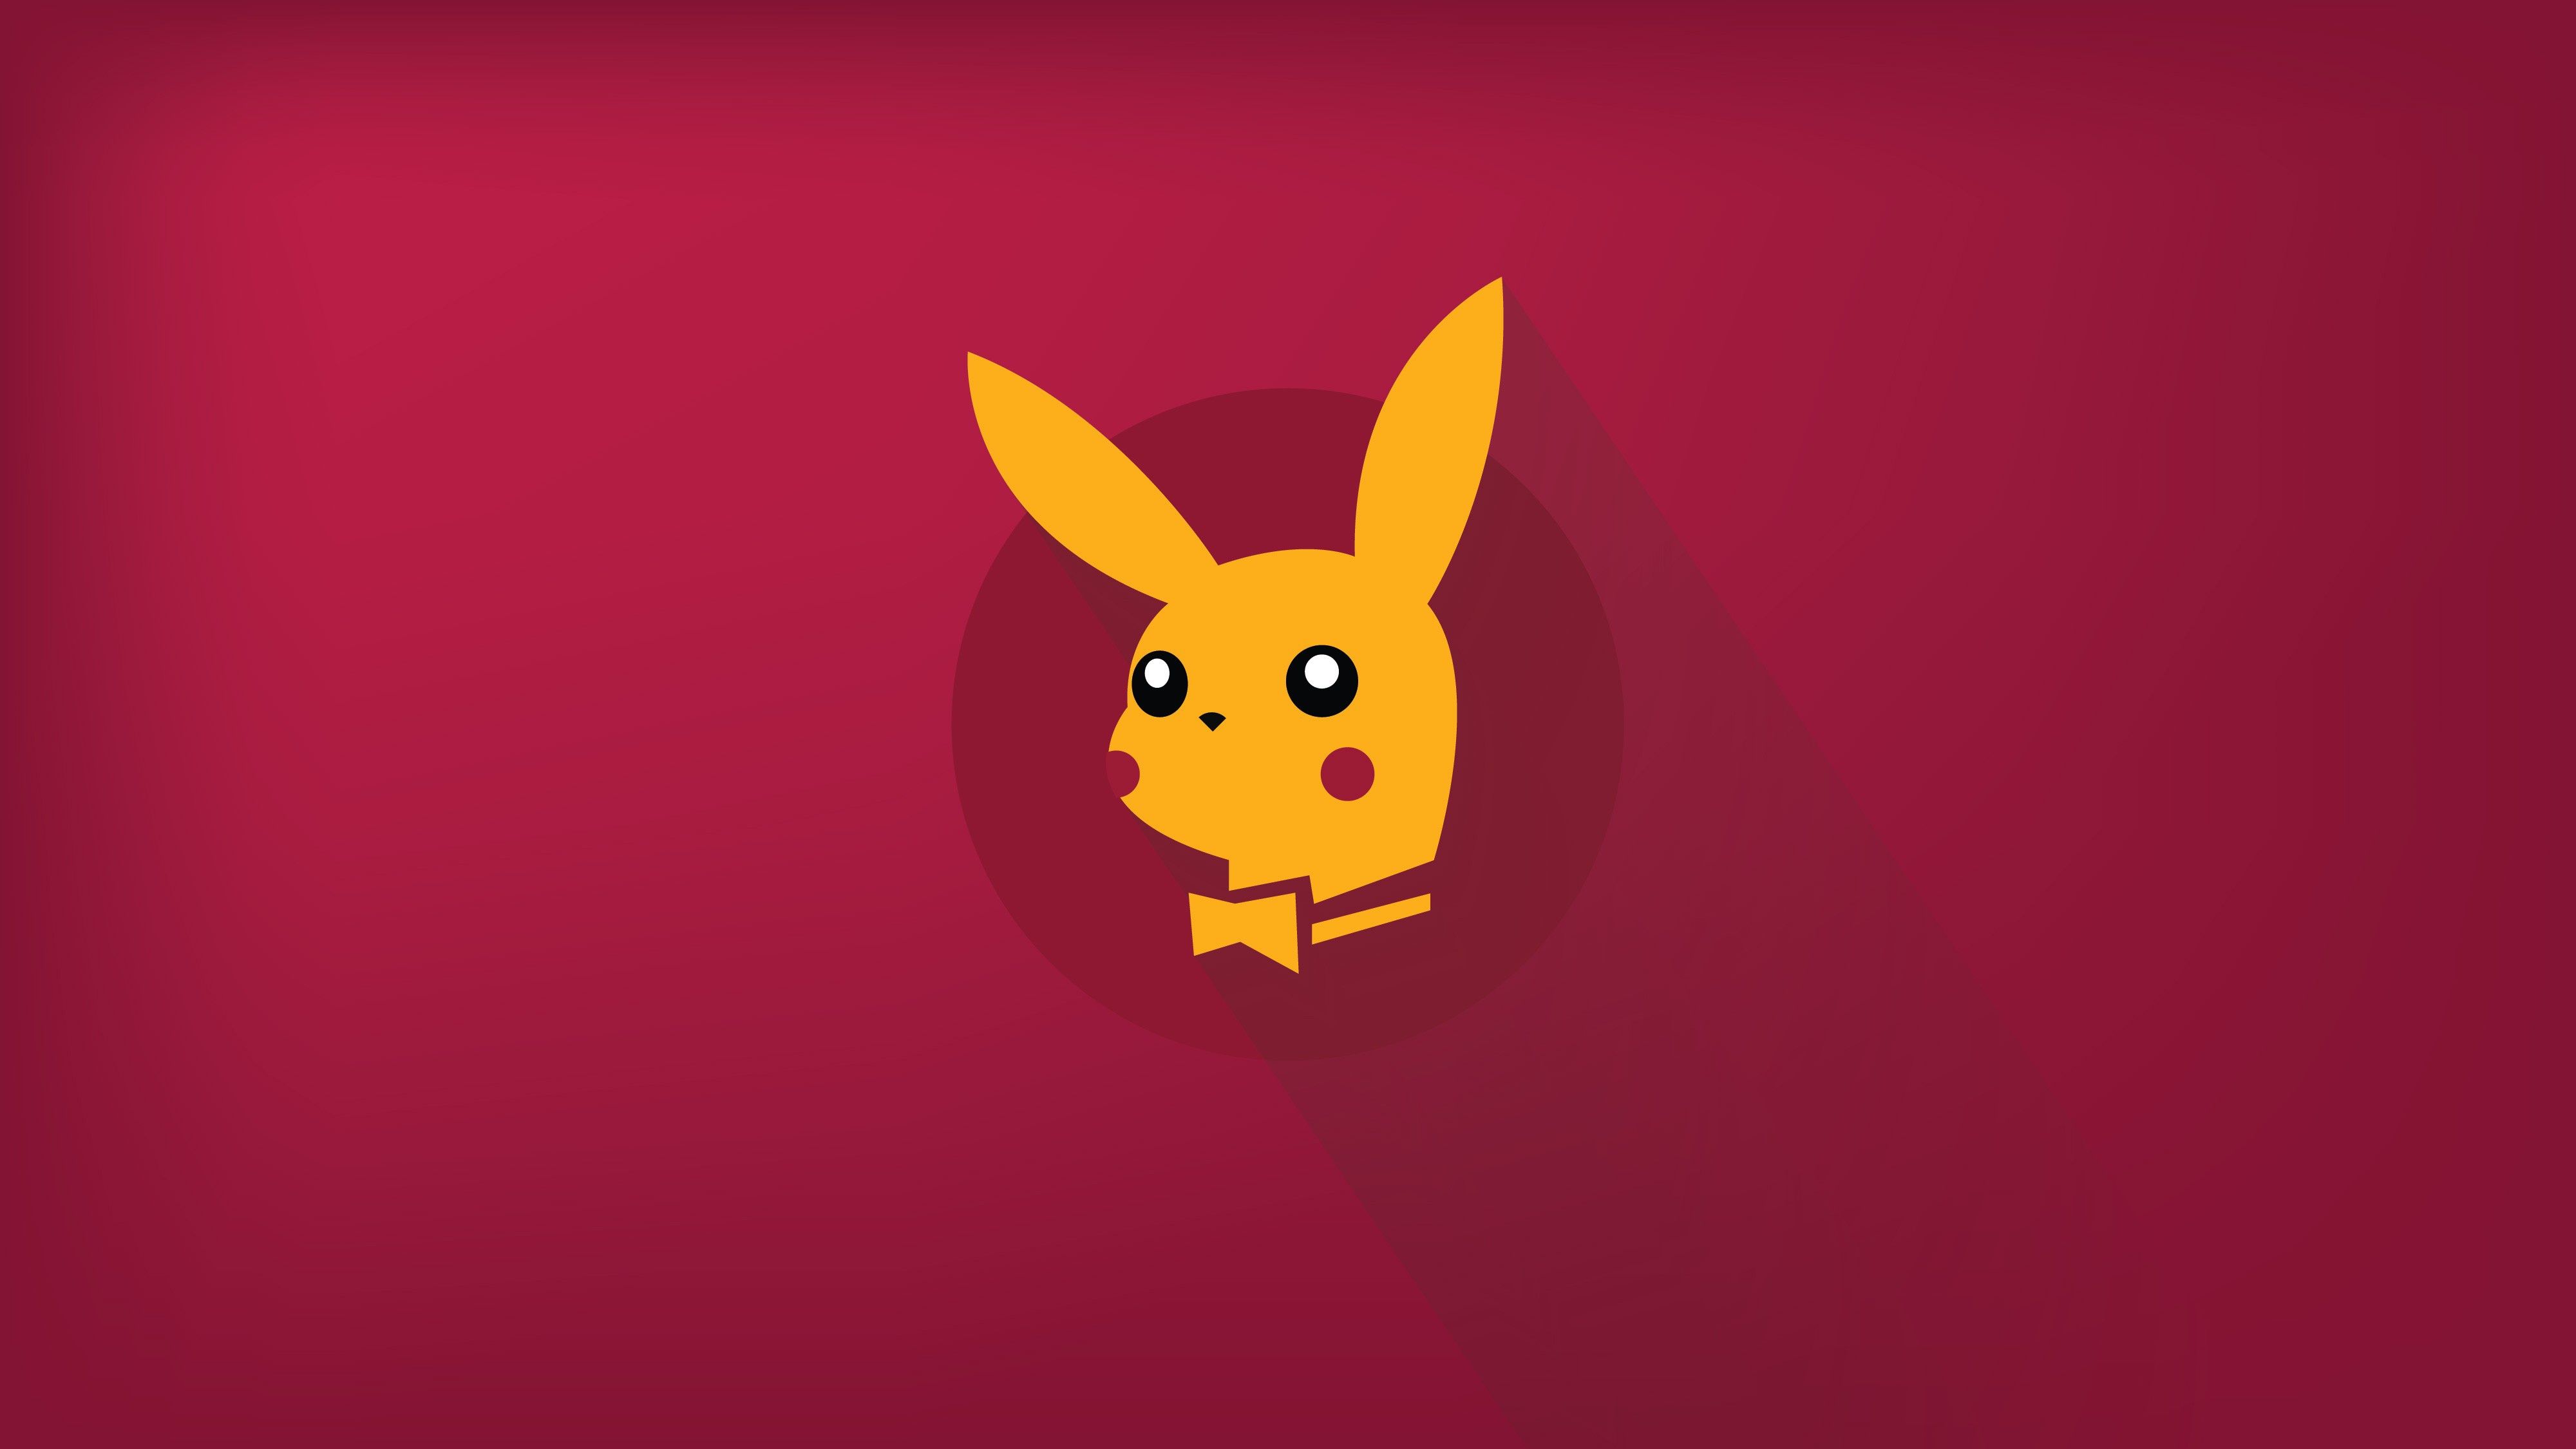 Pokémon 4k Ultra HD Wallpaper. Background Imagex2250